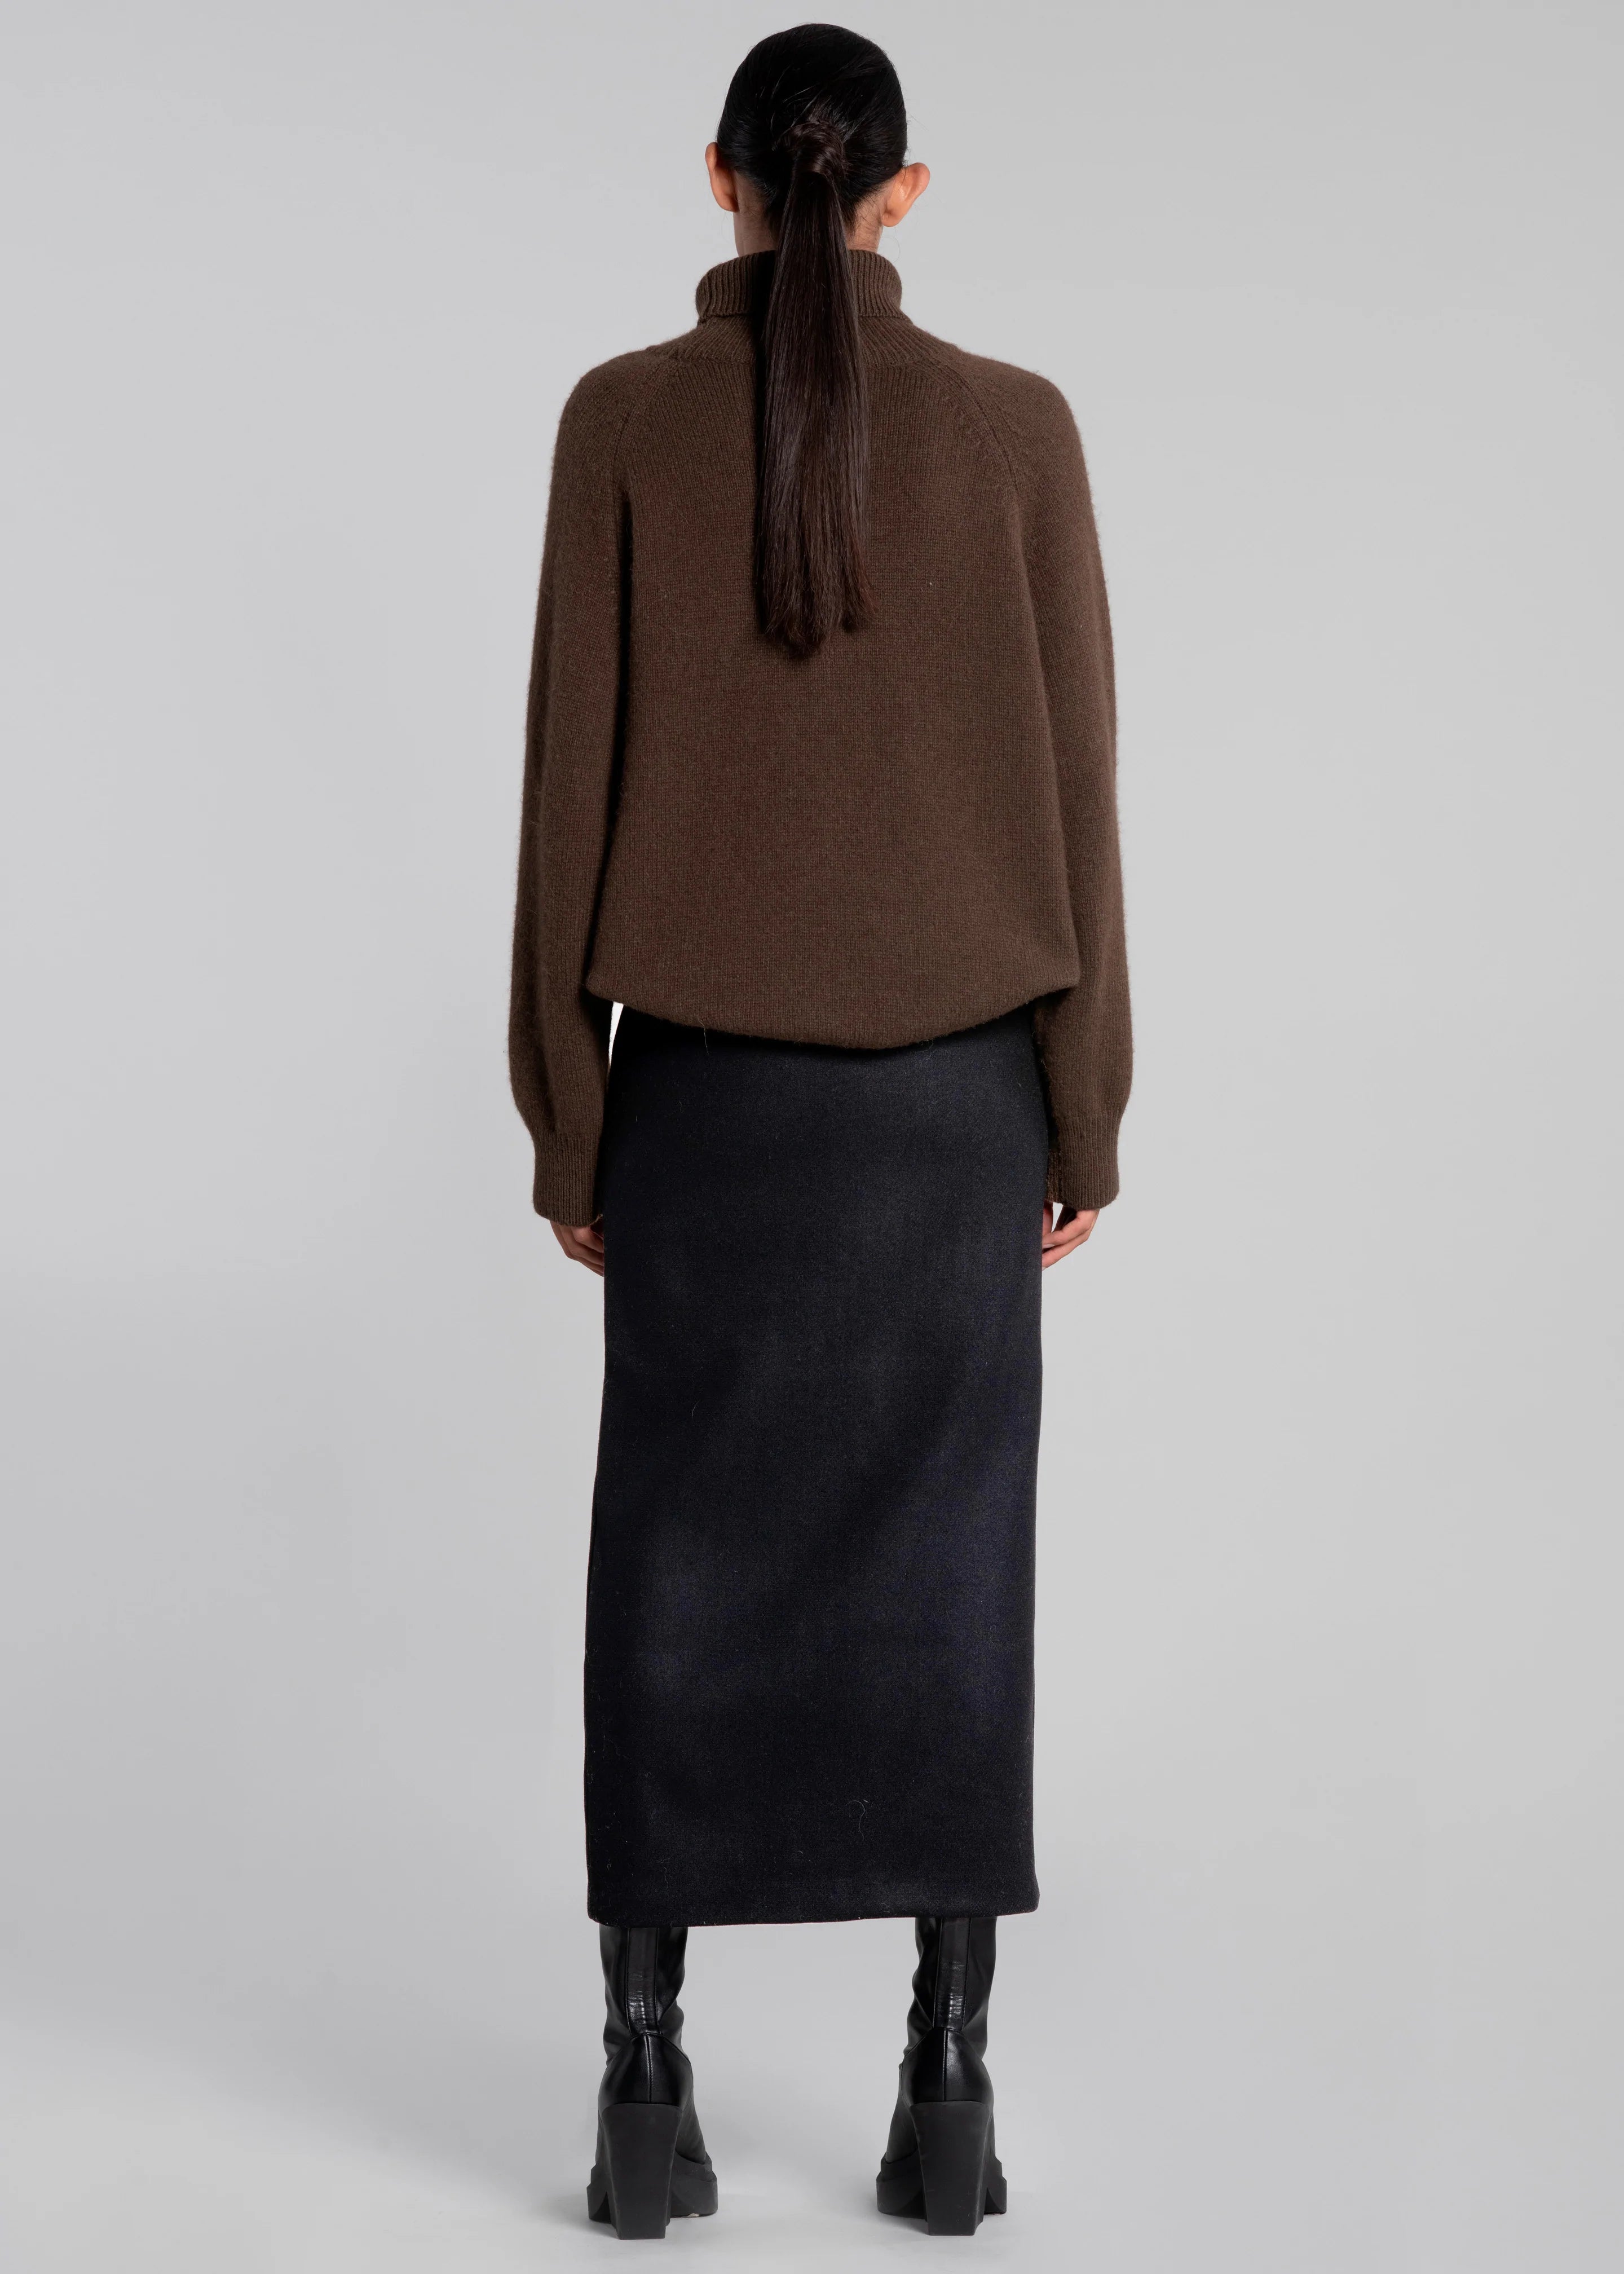 Neasi Wool-Blend Pencil Skirt - Black - 7